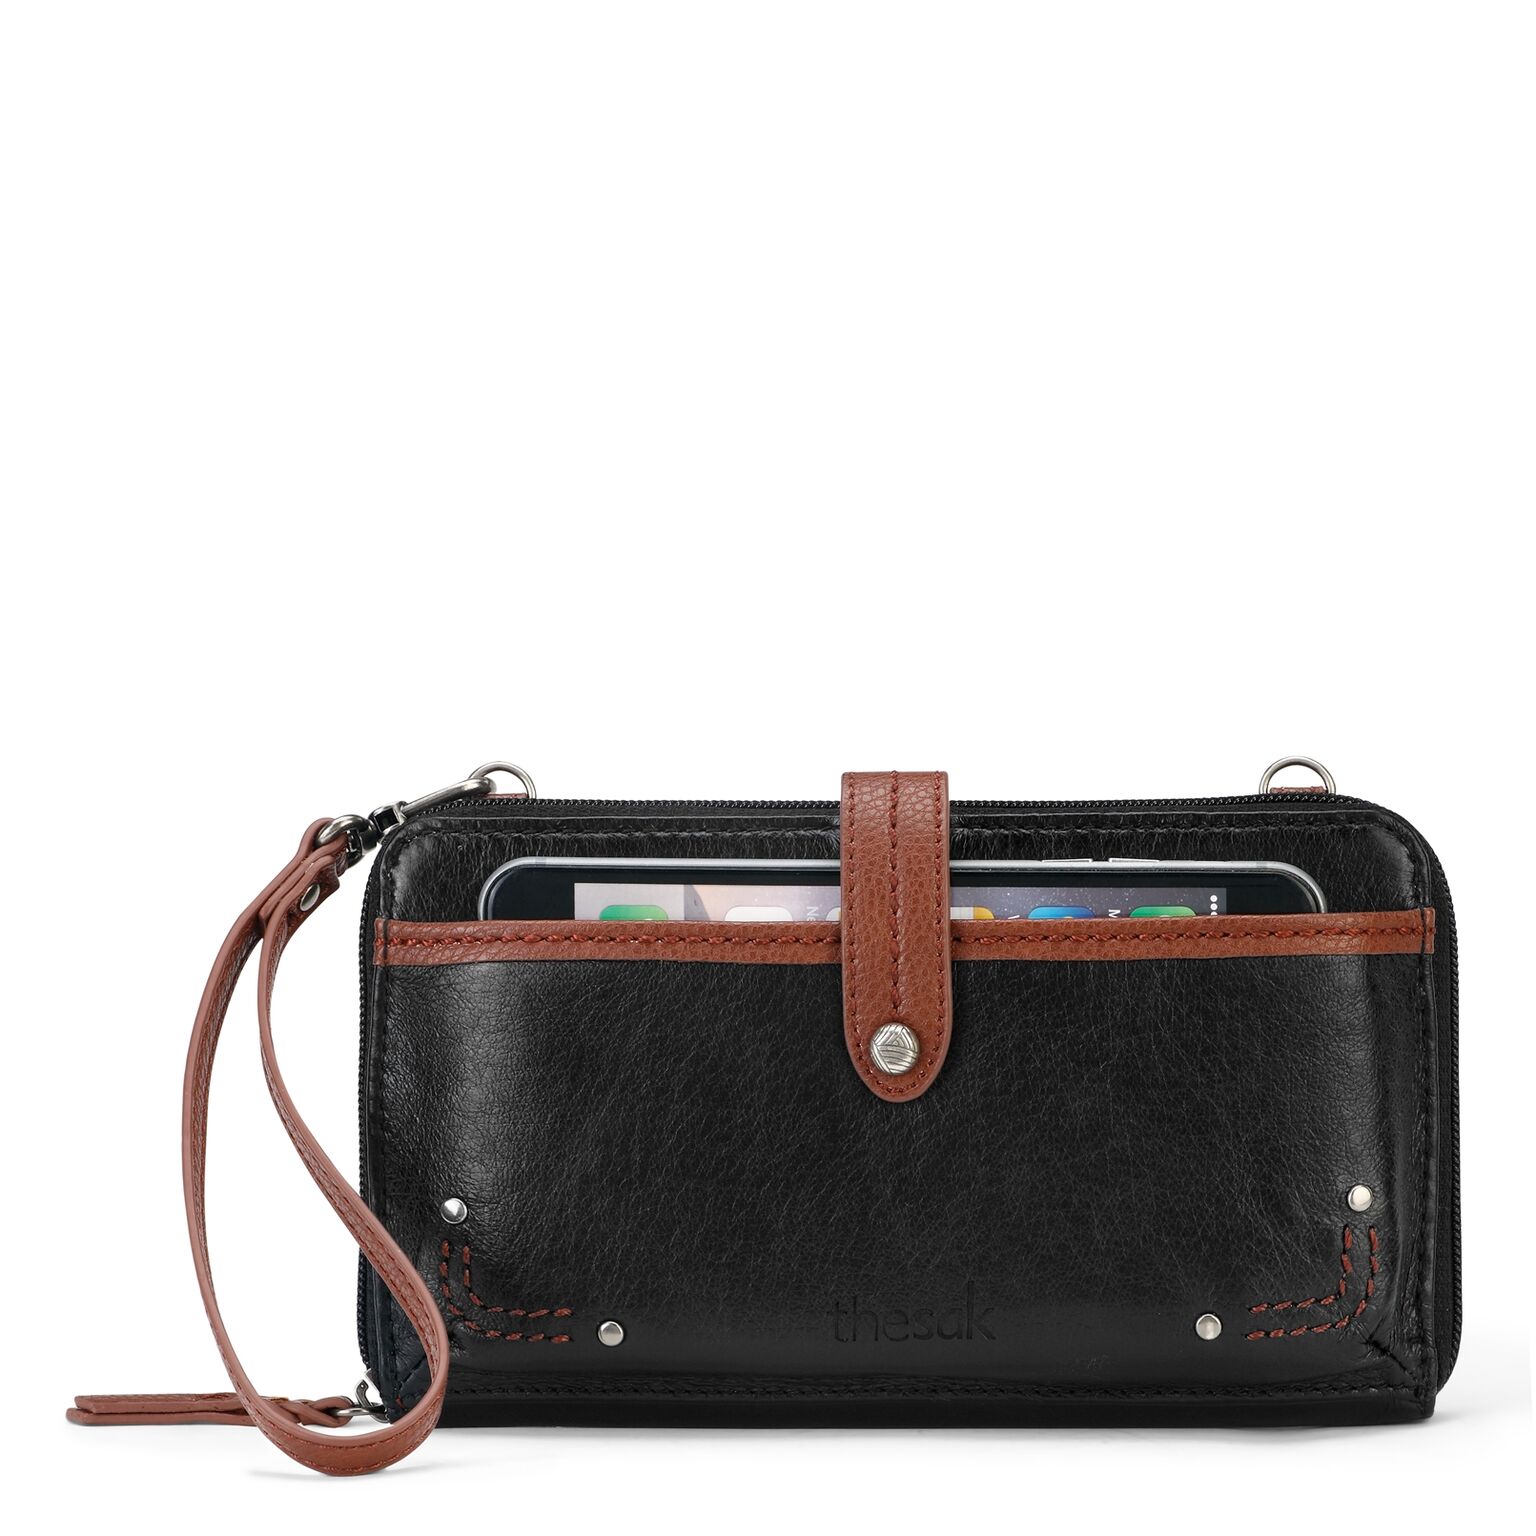 Iris Leather Large Smartphone Crossbody Mini Bag | Purse | Wallet